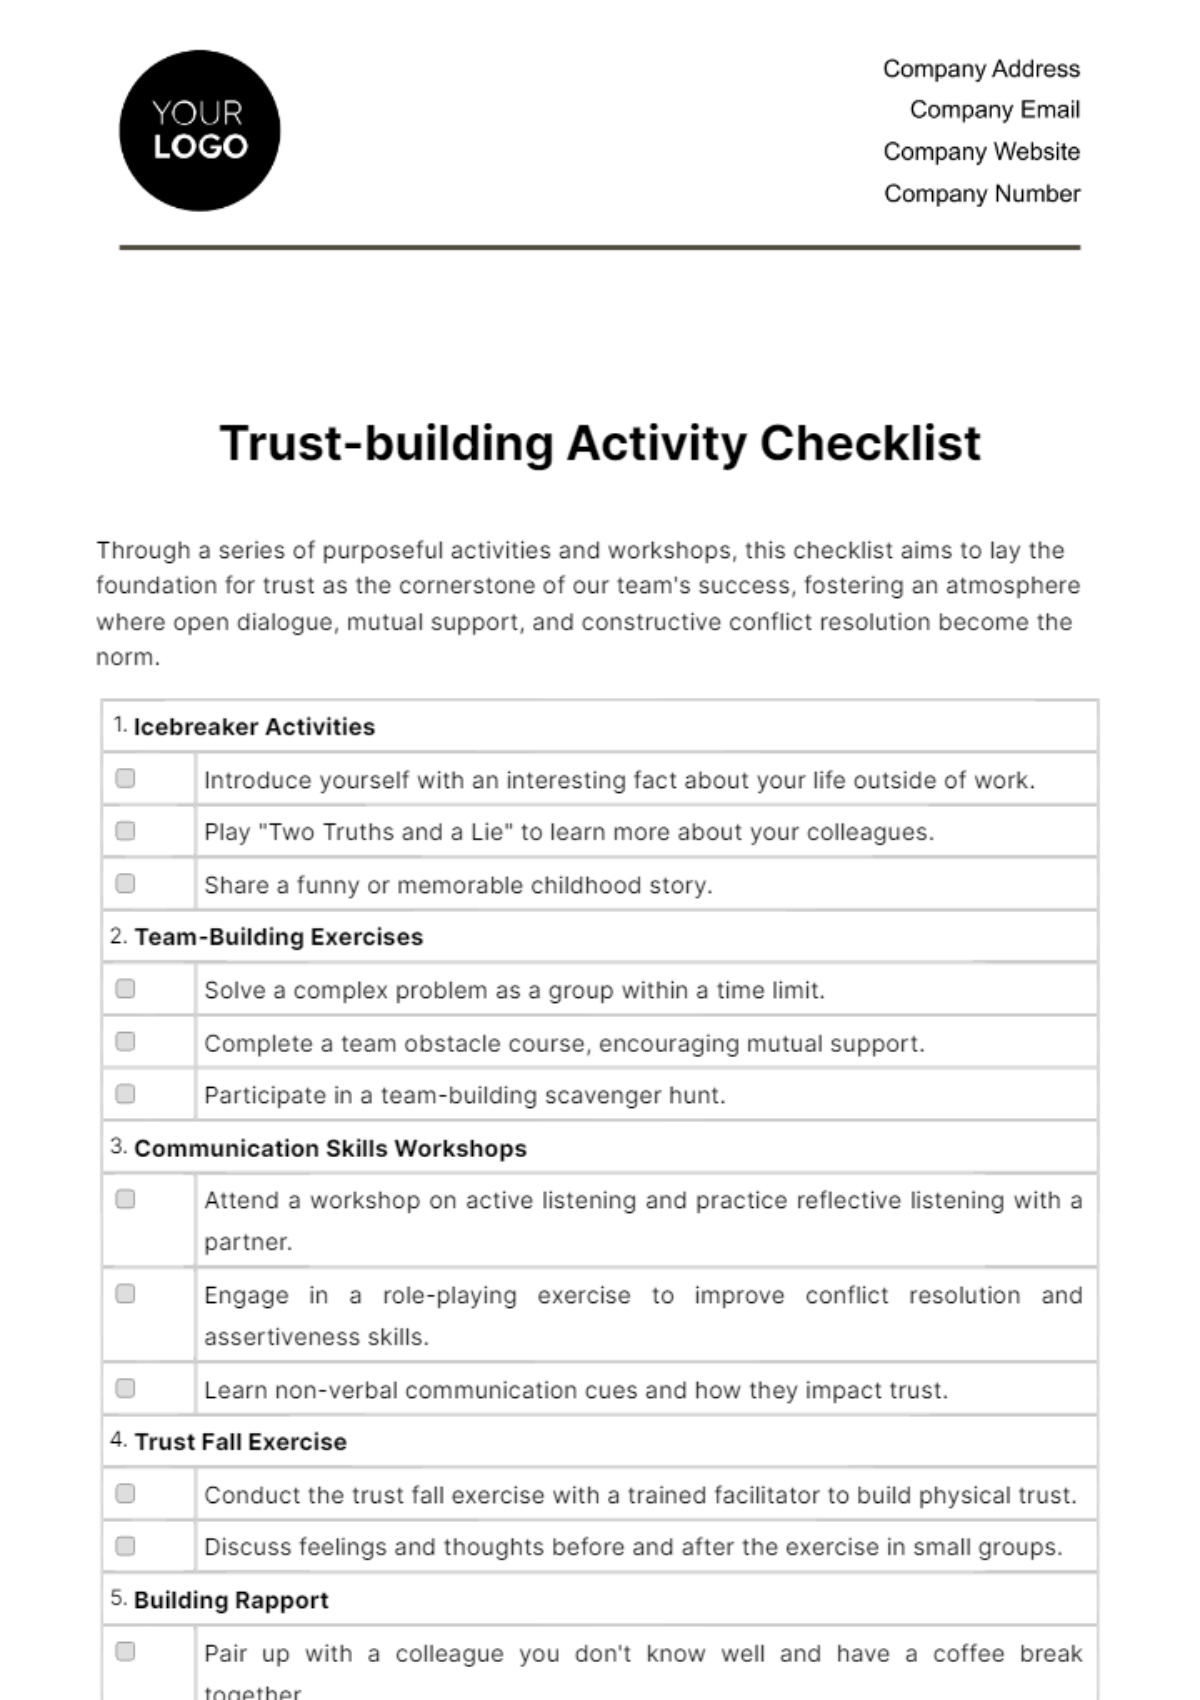 Trust-building Activity Checklist HR Template